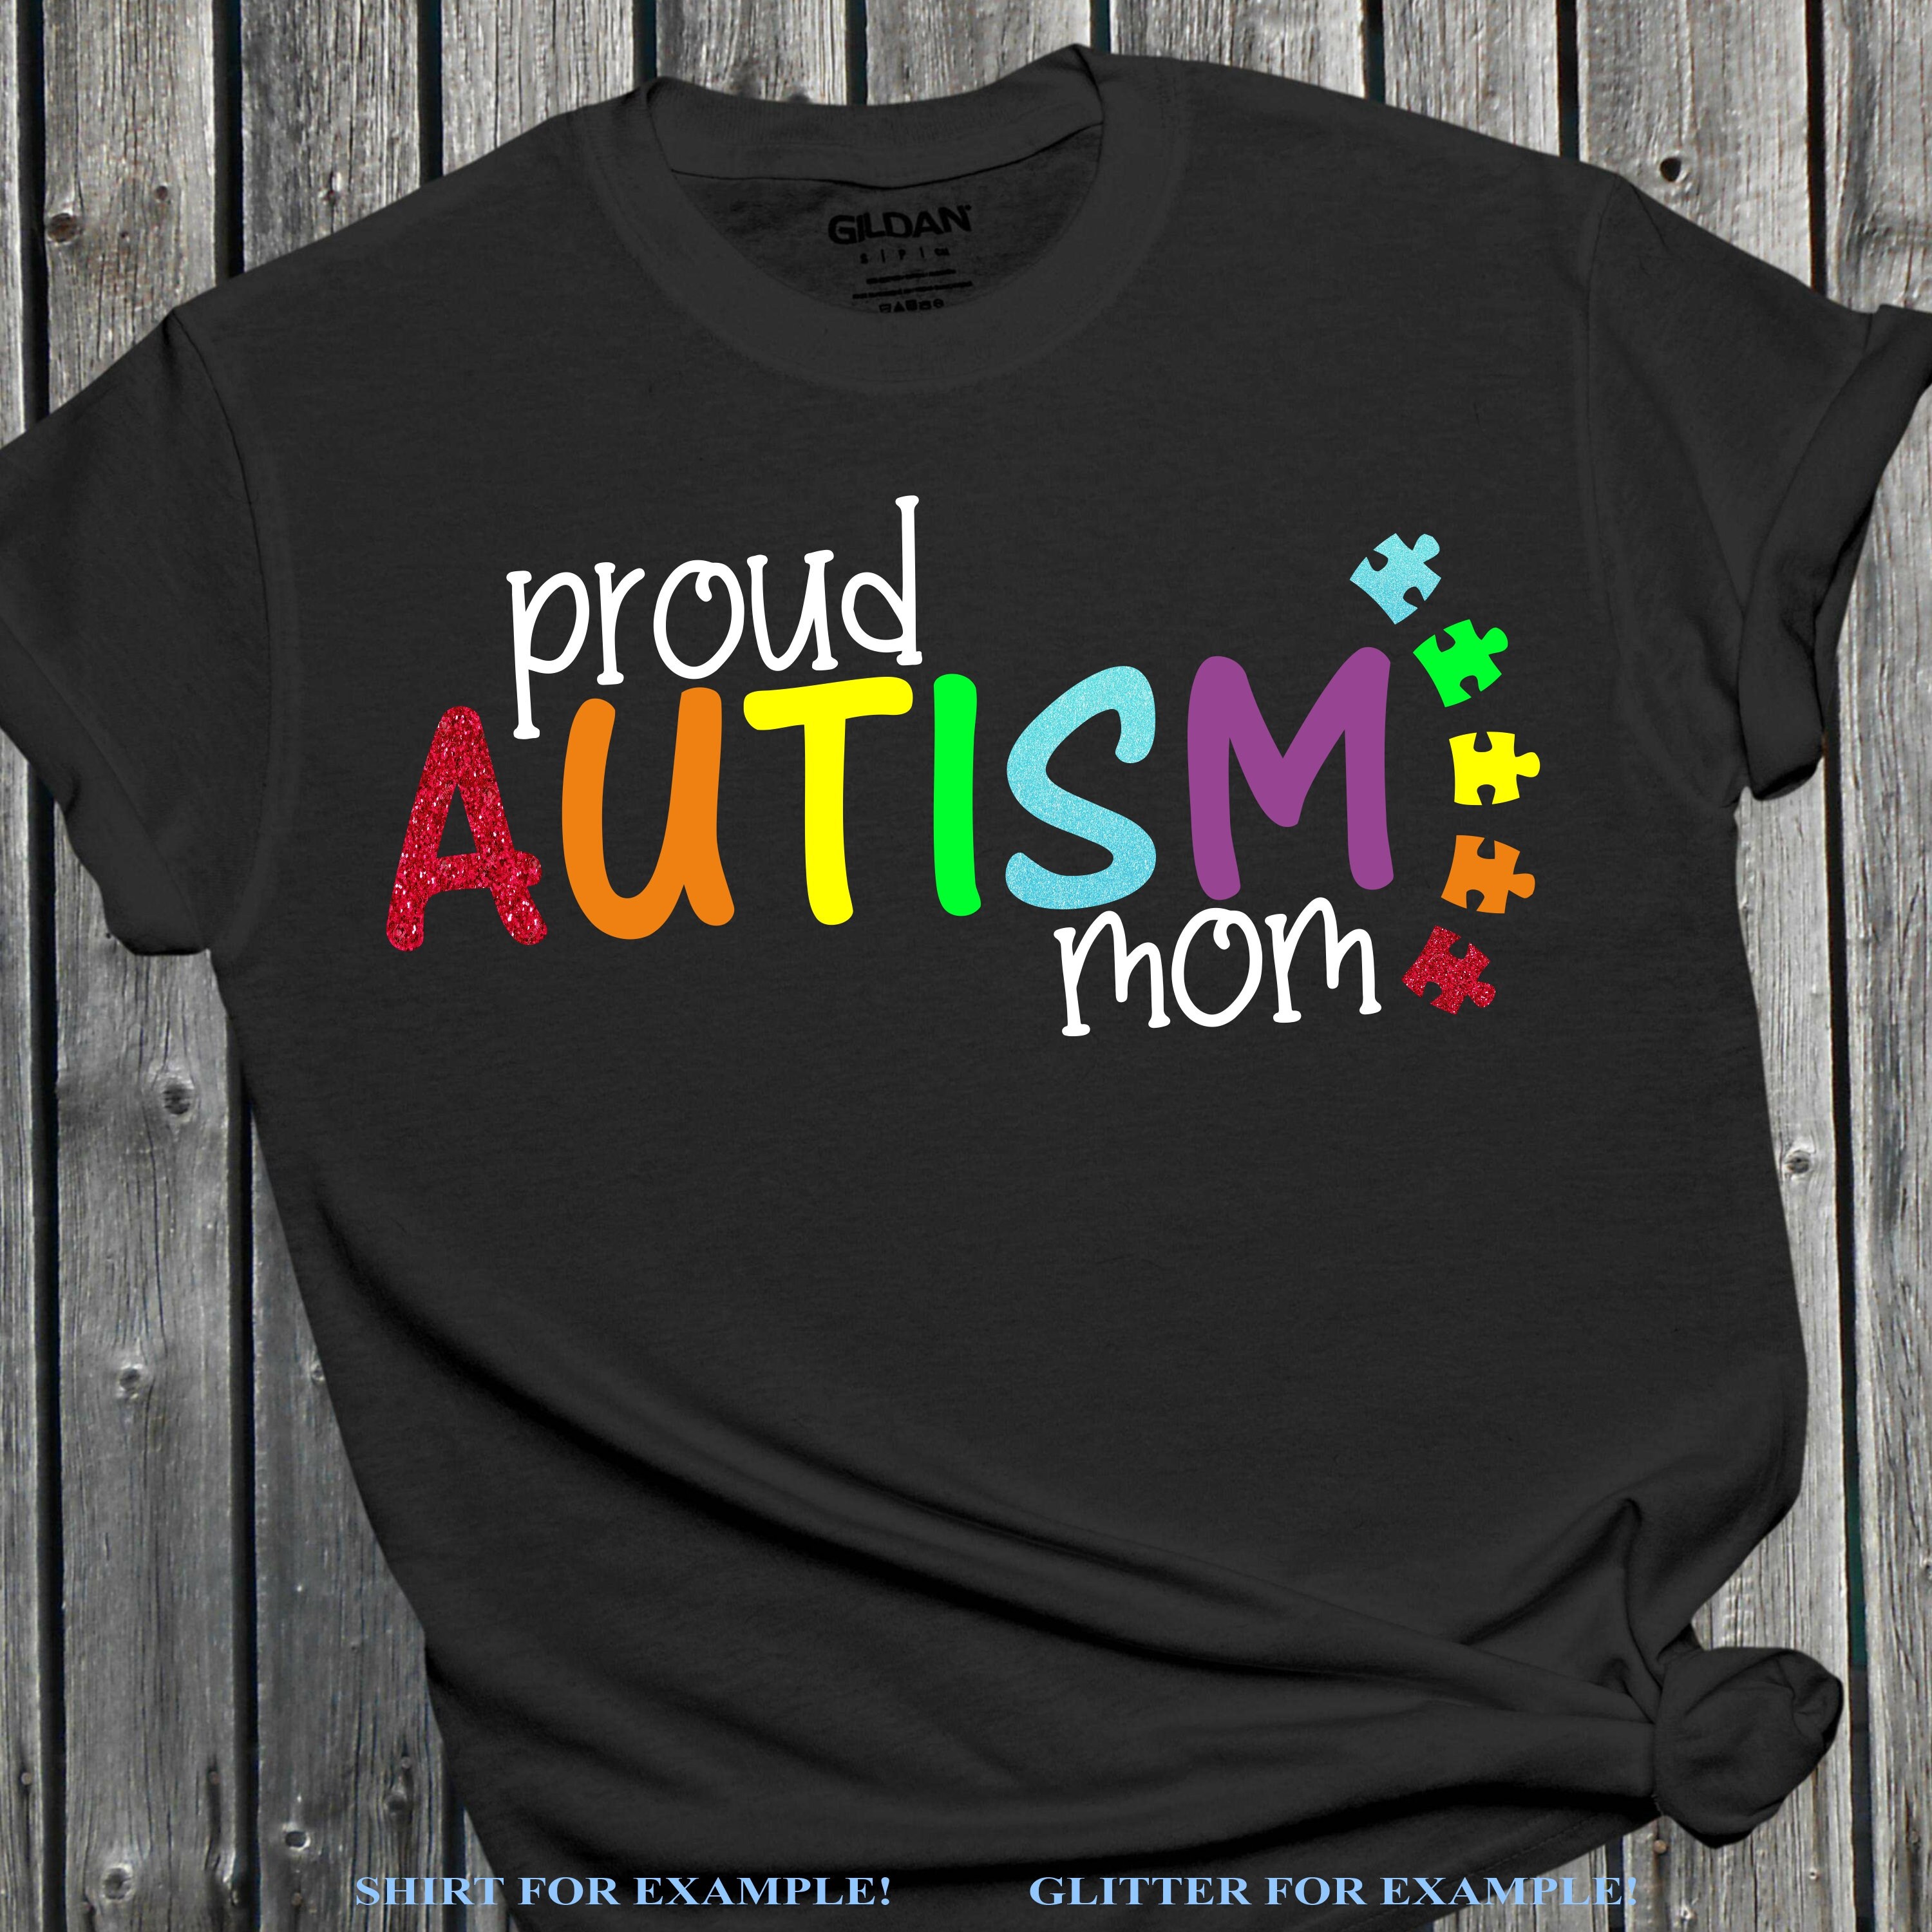 Download proud autism mom svg, autism svg, awareness svg, autism ...